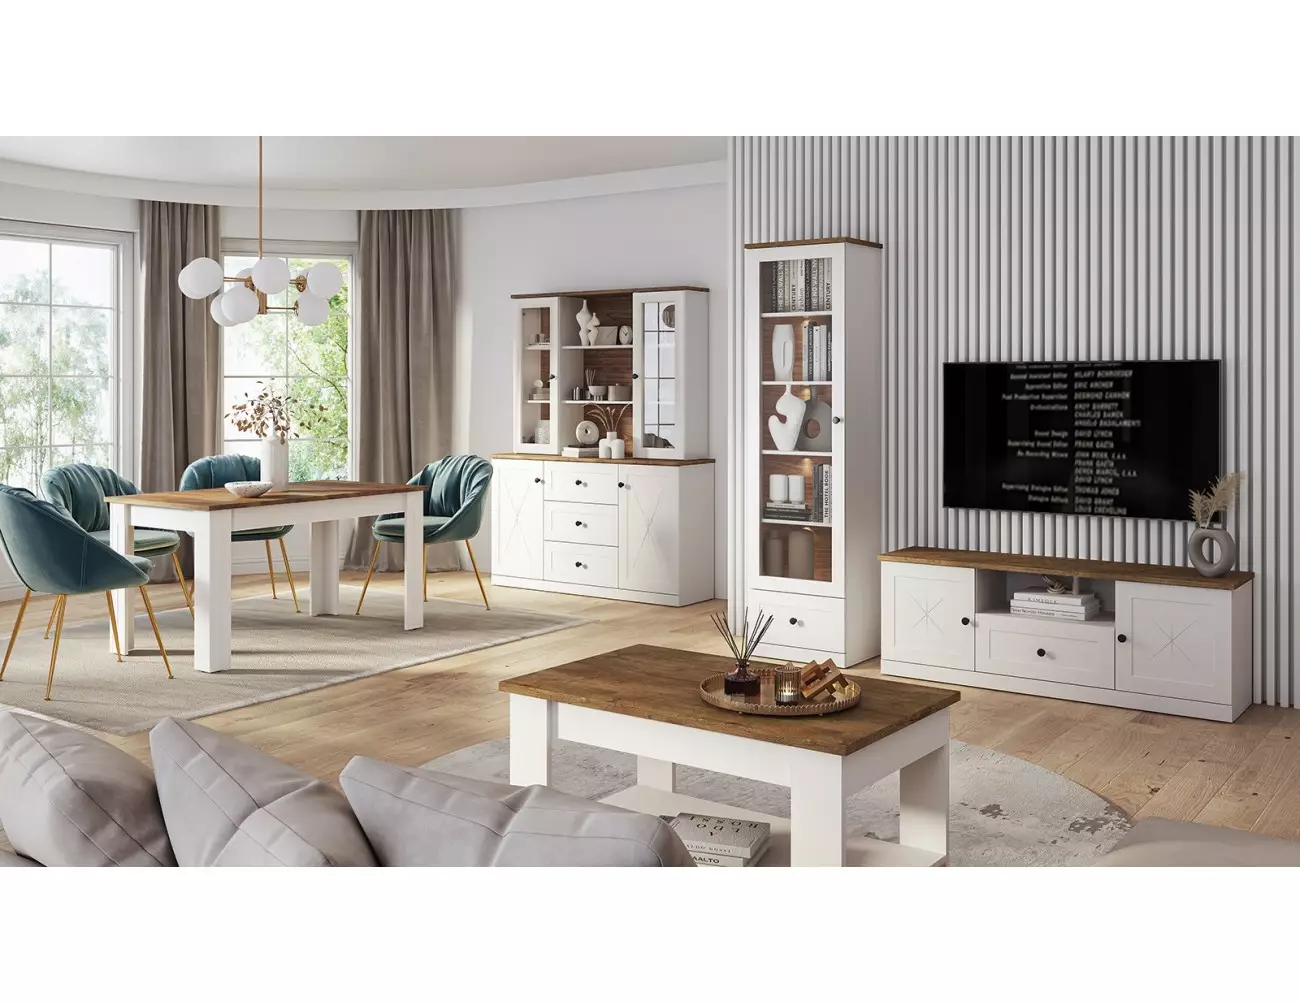 Lille Collection - Classic White Provencal Furniture - J&B Furniture